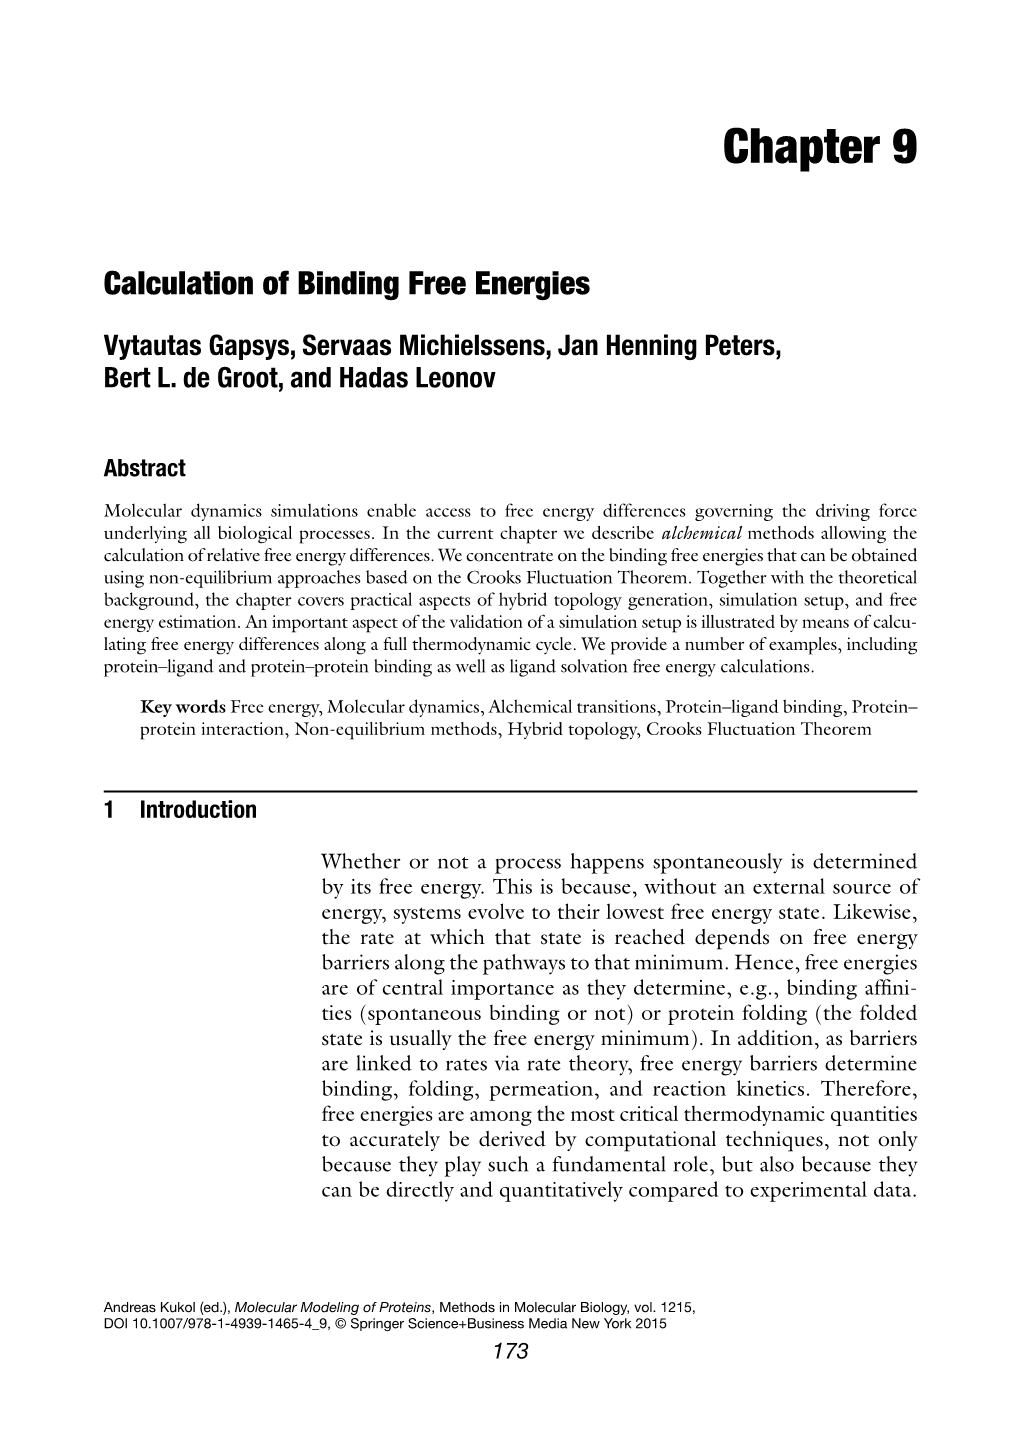 Calculation of Binding Free Energies